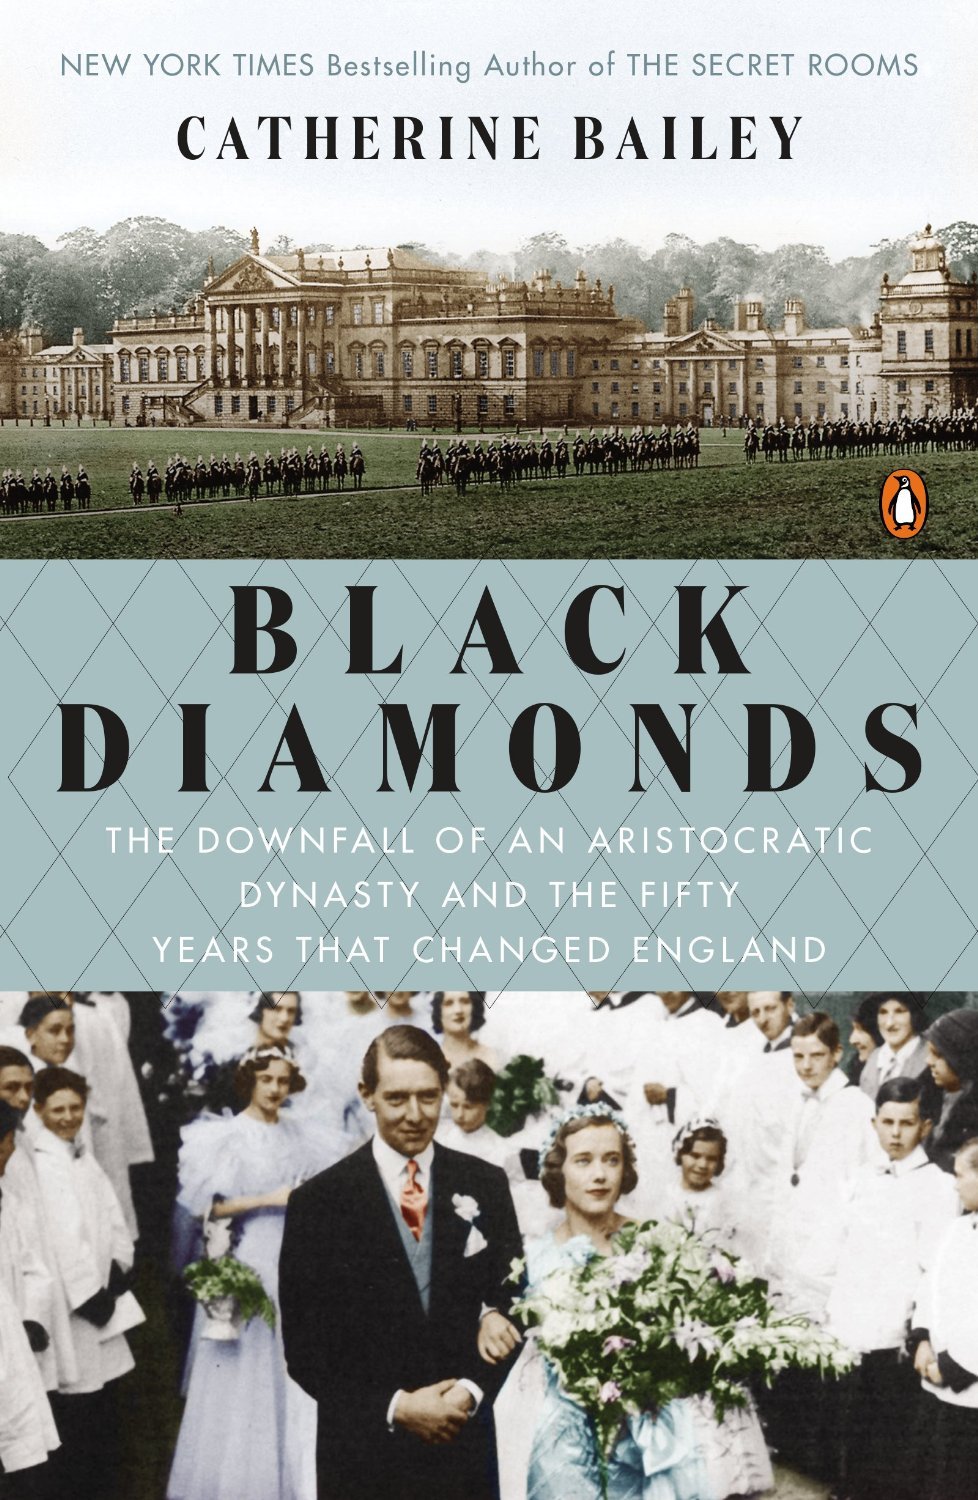 REVIEW: BLACK DIAMONDS by Catherine Bailey